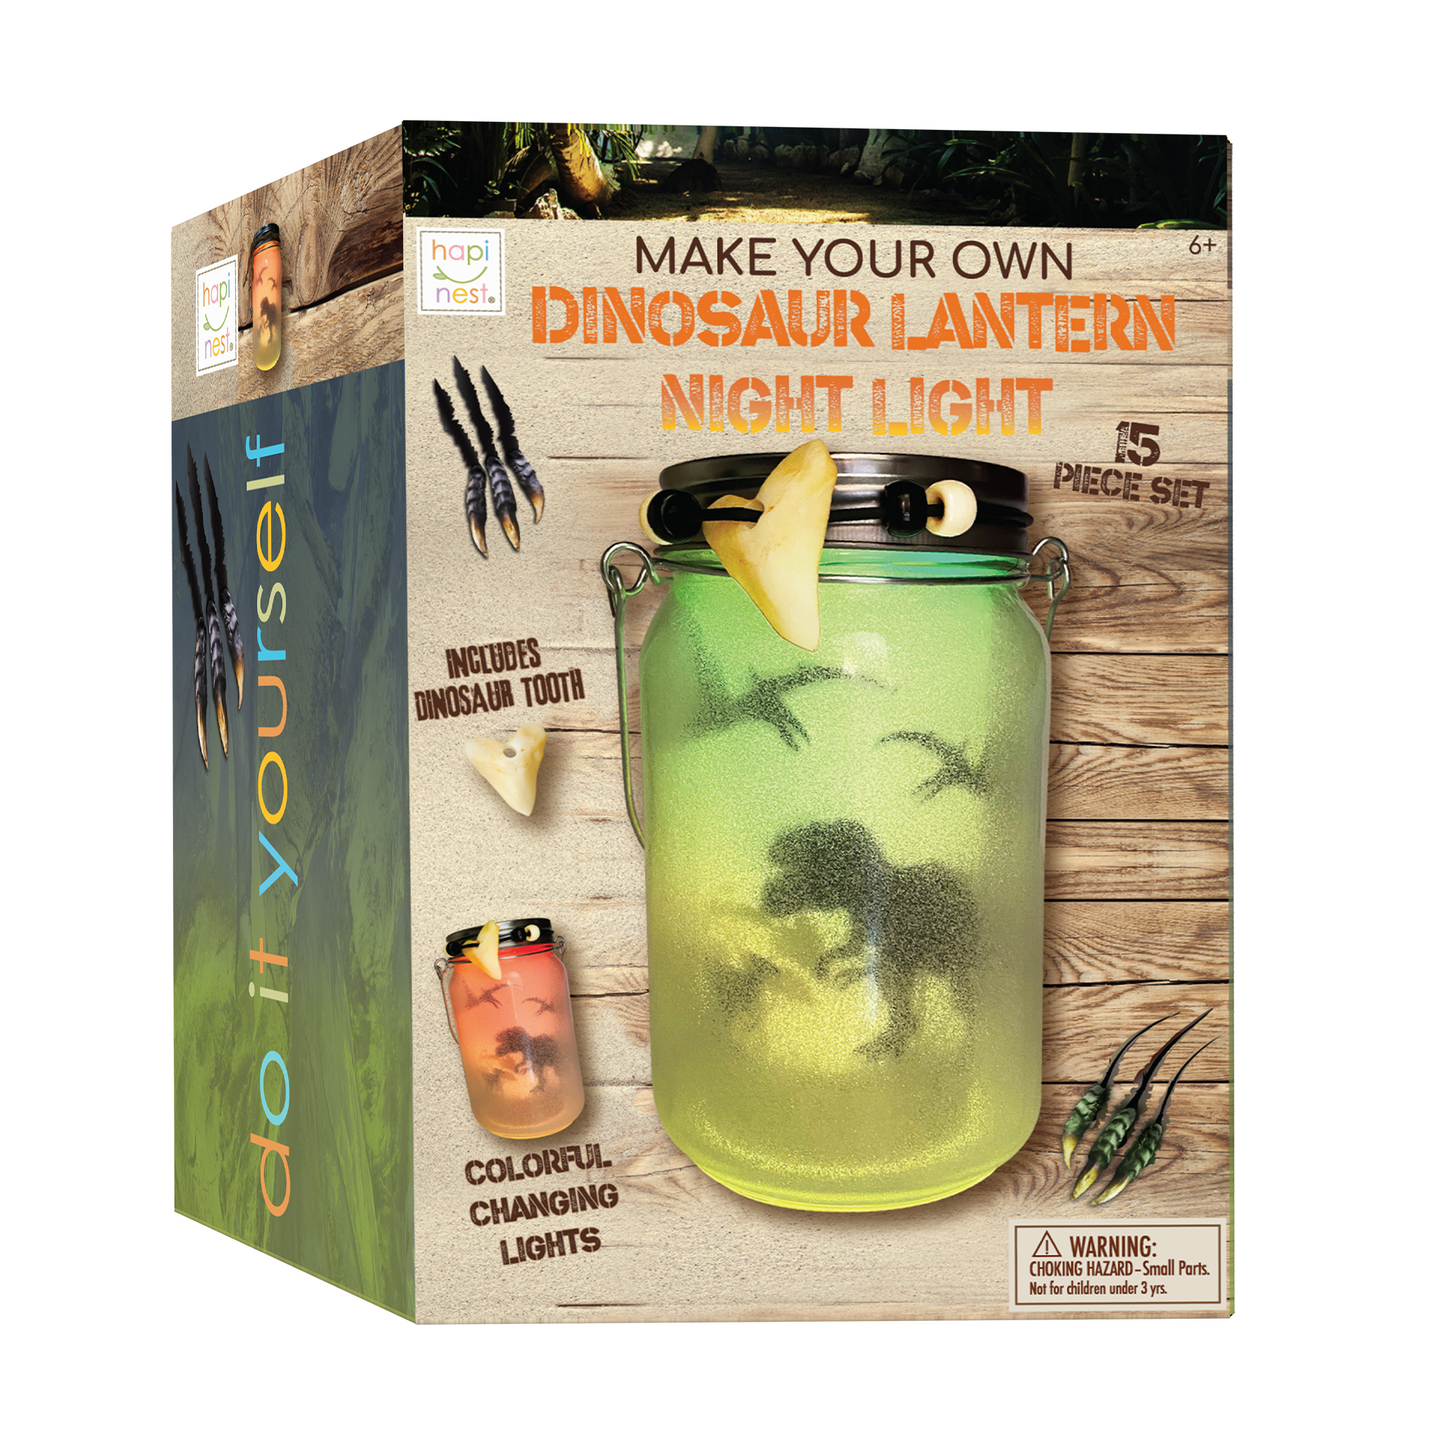 DIY Dinosaur Lantern Night Light - Craft Kit